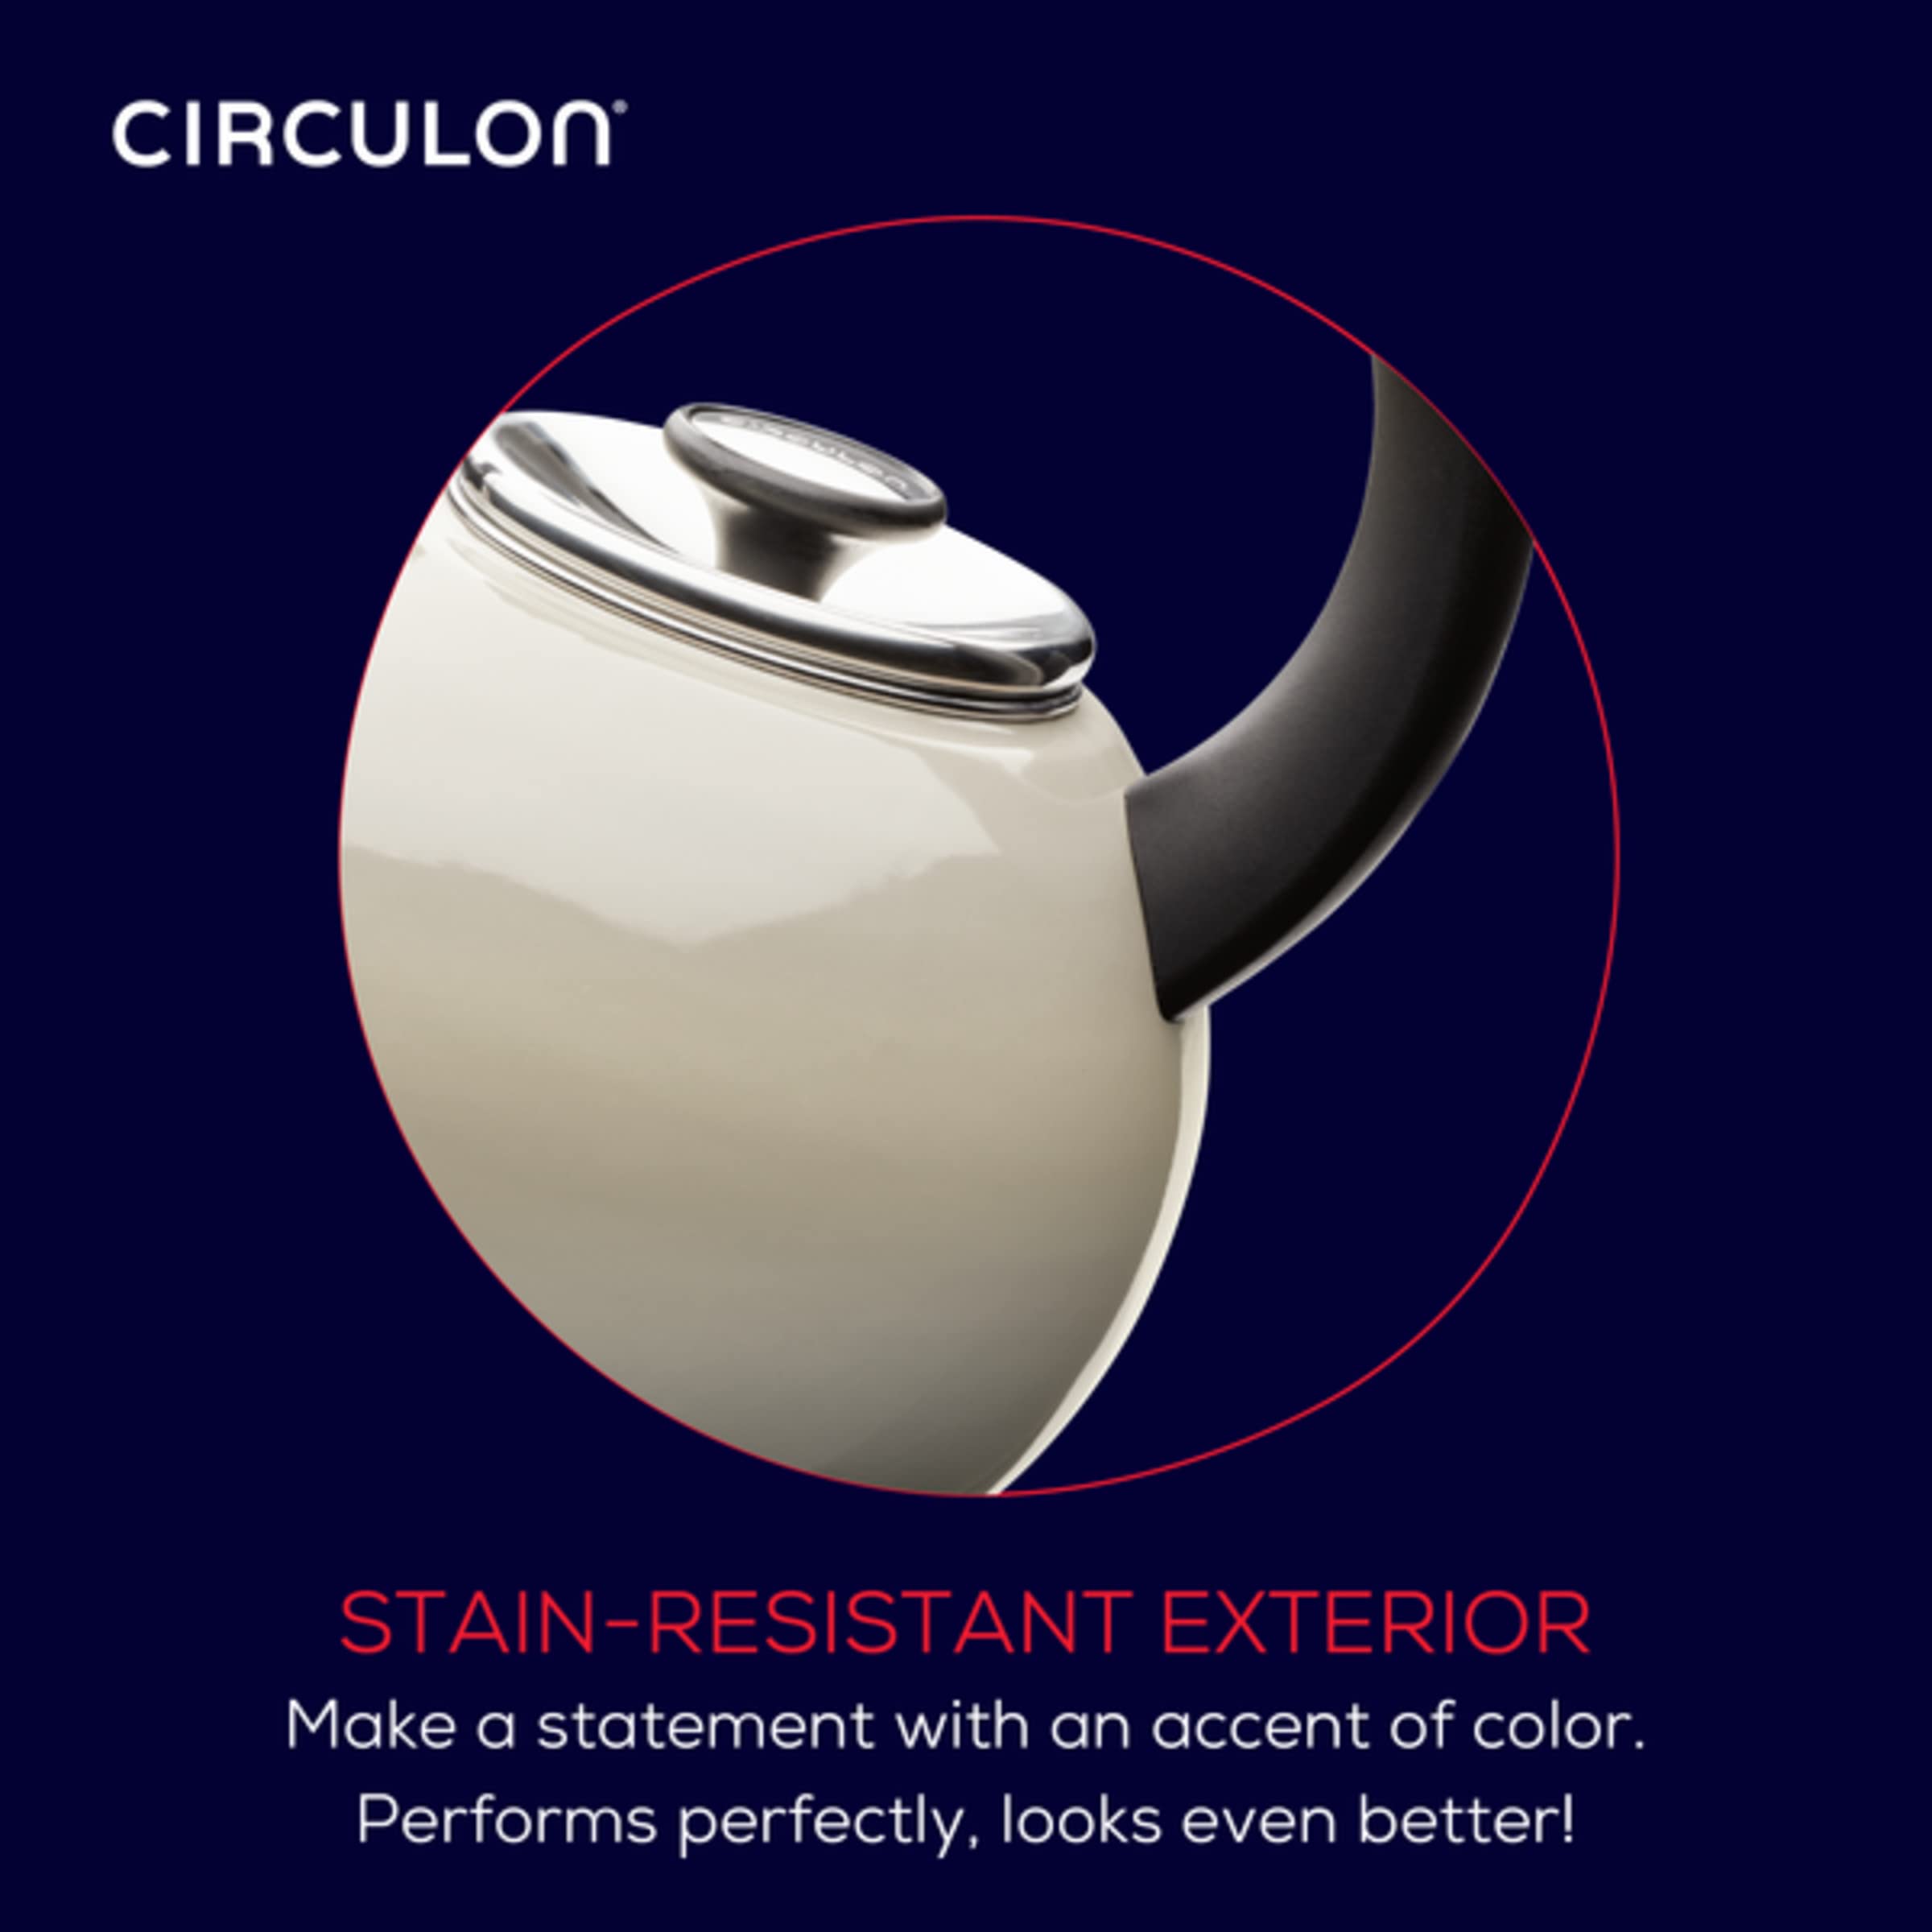 Circulon Enamel on Steel Whistling Teakettle/Teapot With Flip-Up Spout, 2 Quart - Gray